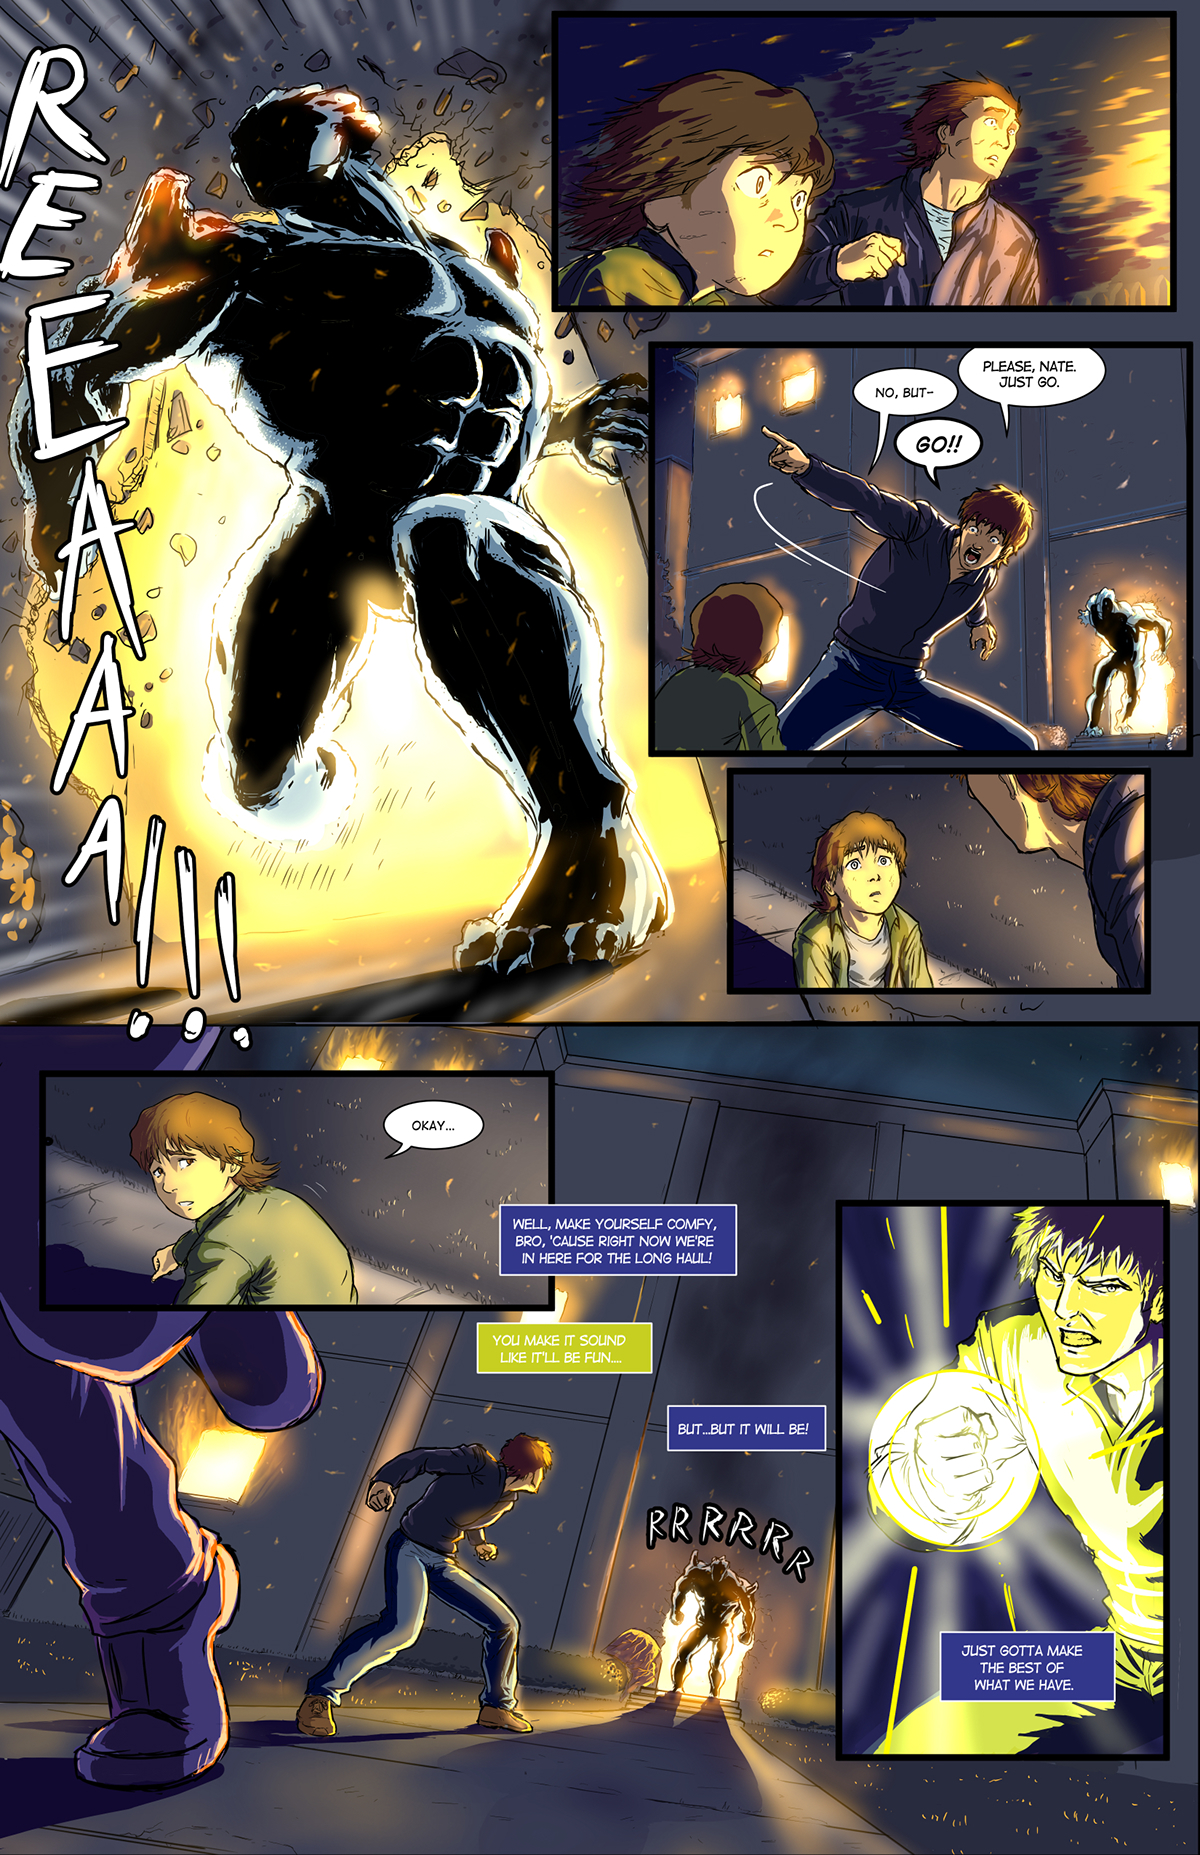 Webcomic Comic Book superheroes Dc Comics storyboarding   action fight scenes